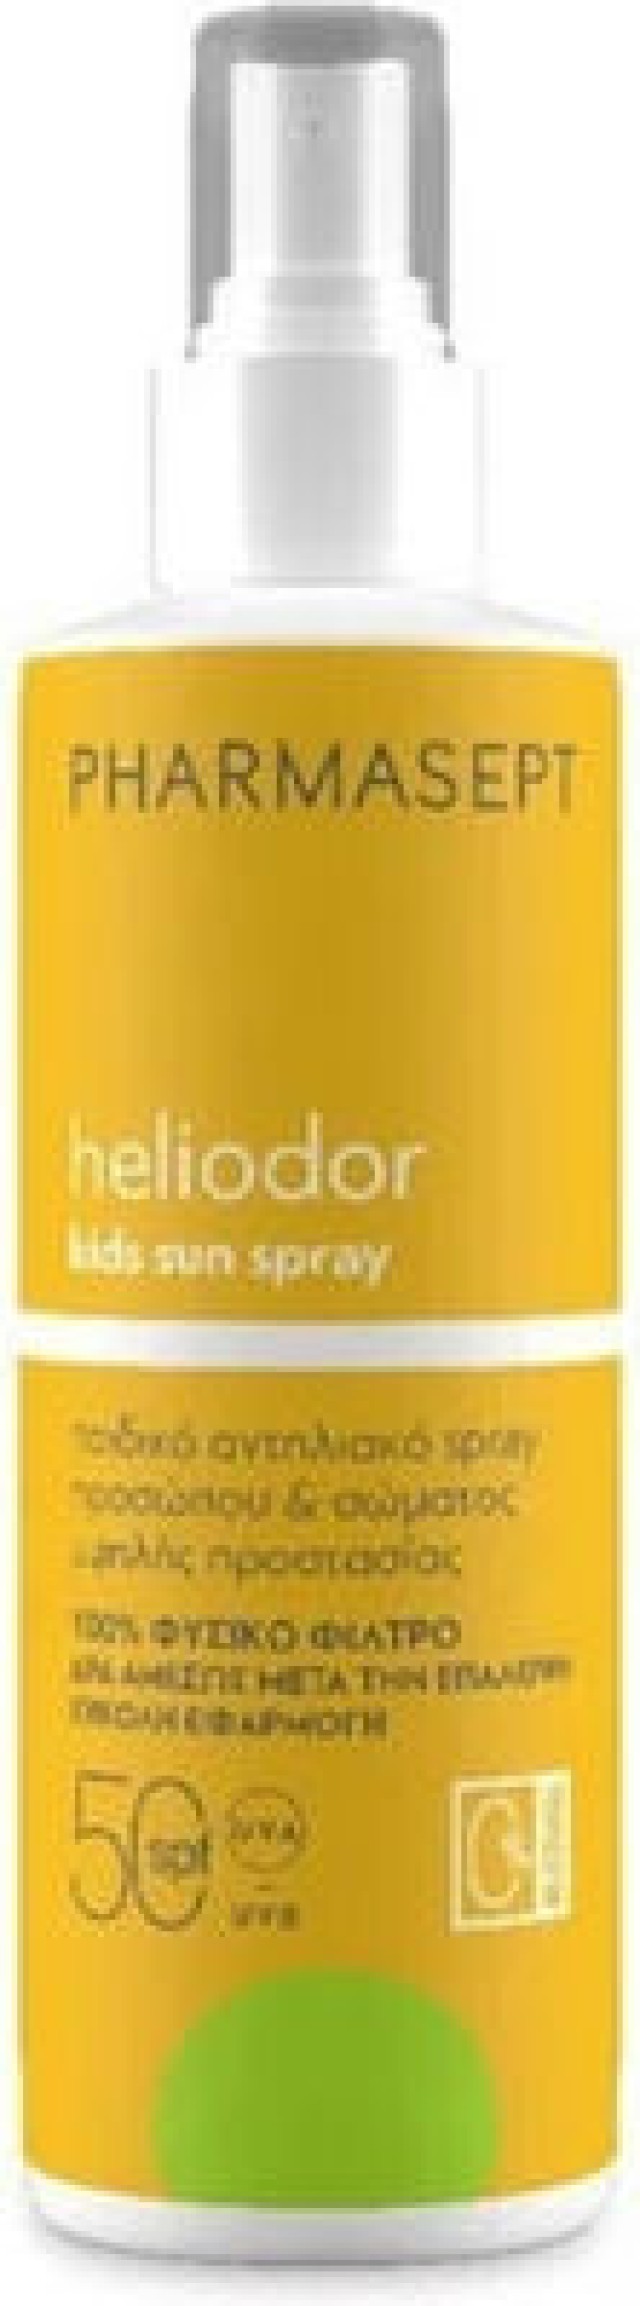 Pharmasept Heliodor Kids Sun Spray Παιδικό Αντηλιακό Σπρέι Προσώπου & Σώματος με SPF50, 165gr